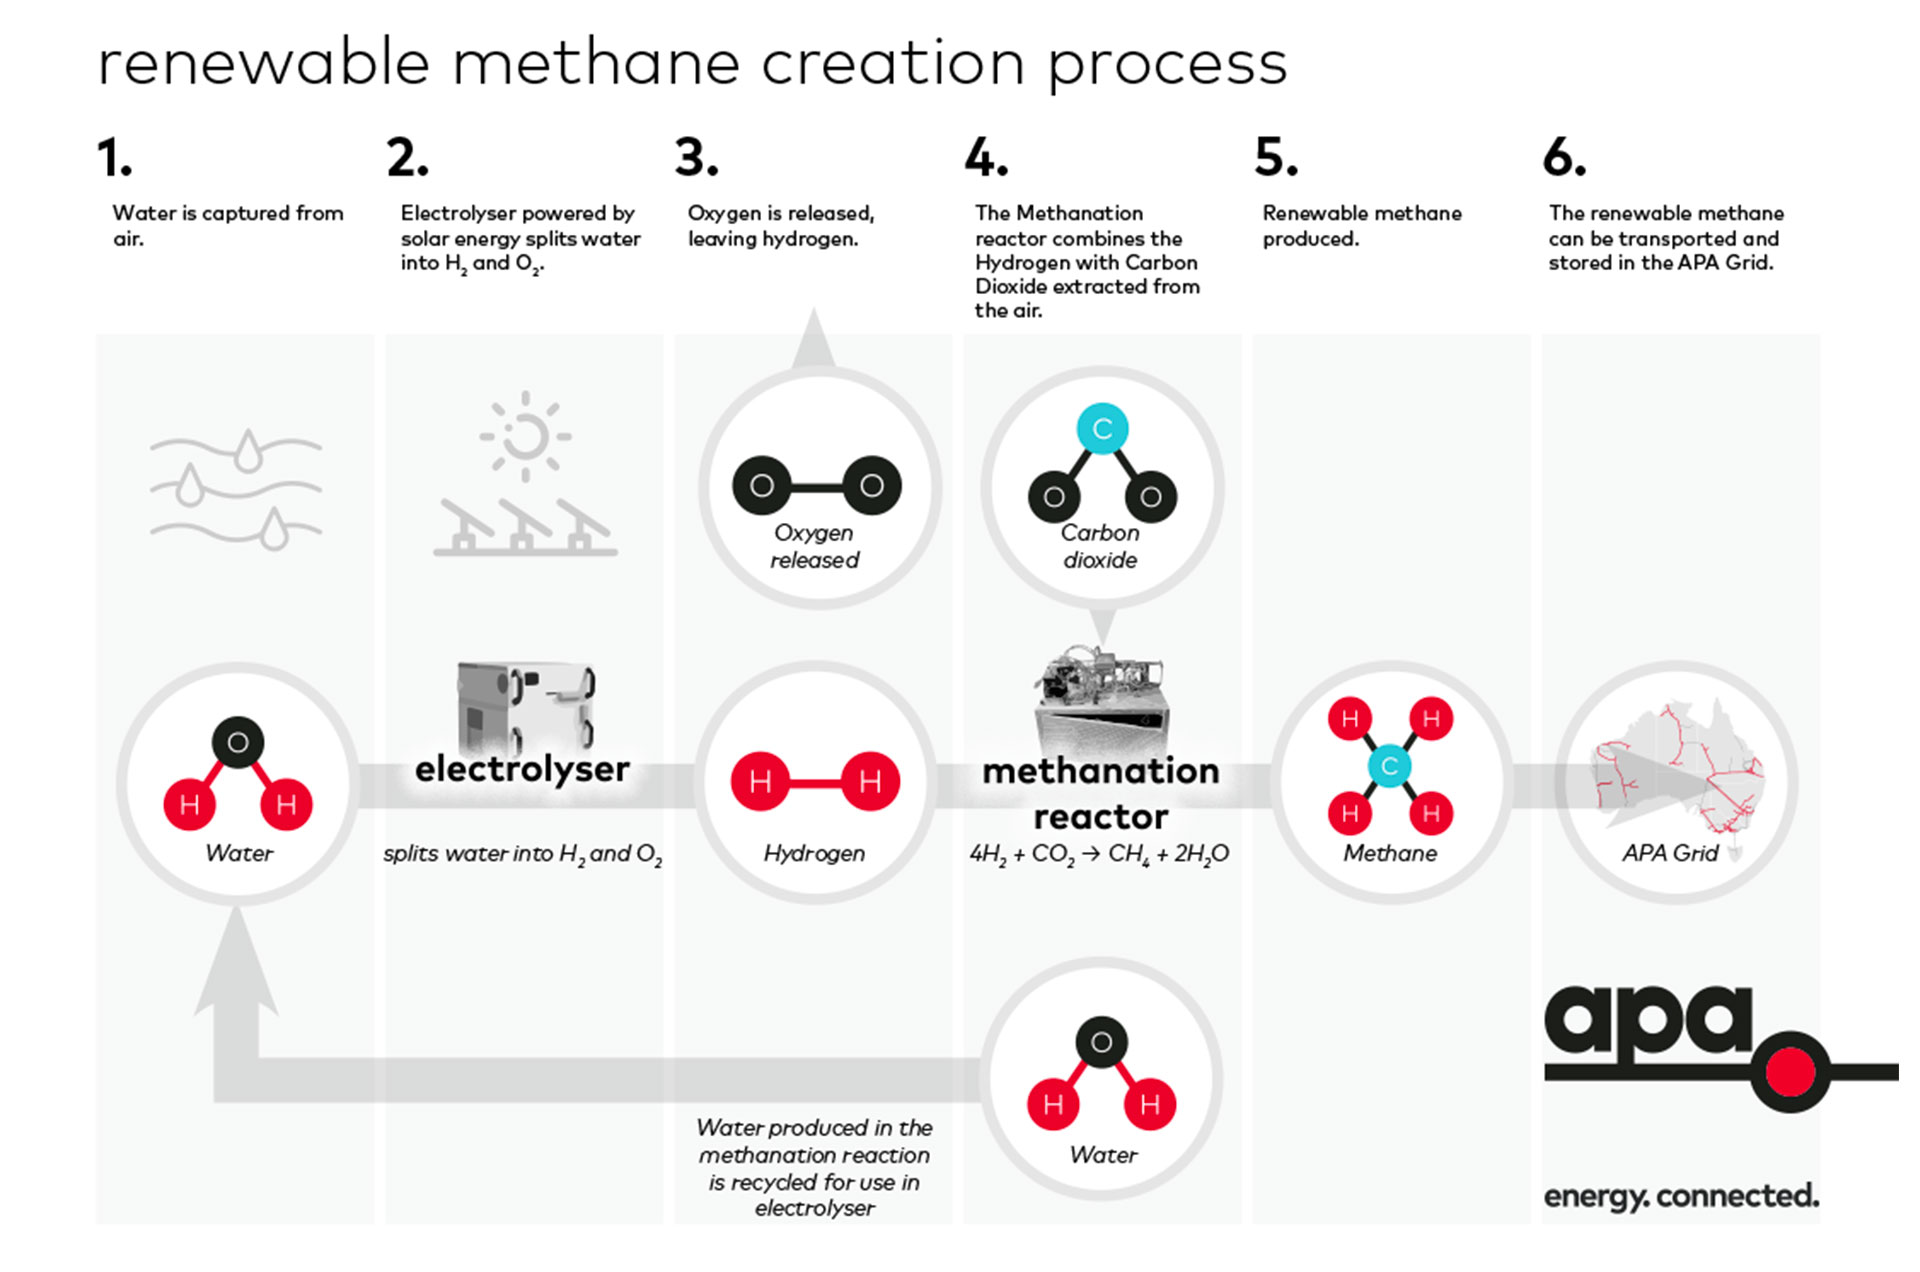 Image - Renewable methane creation process